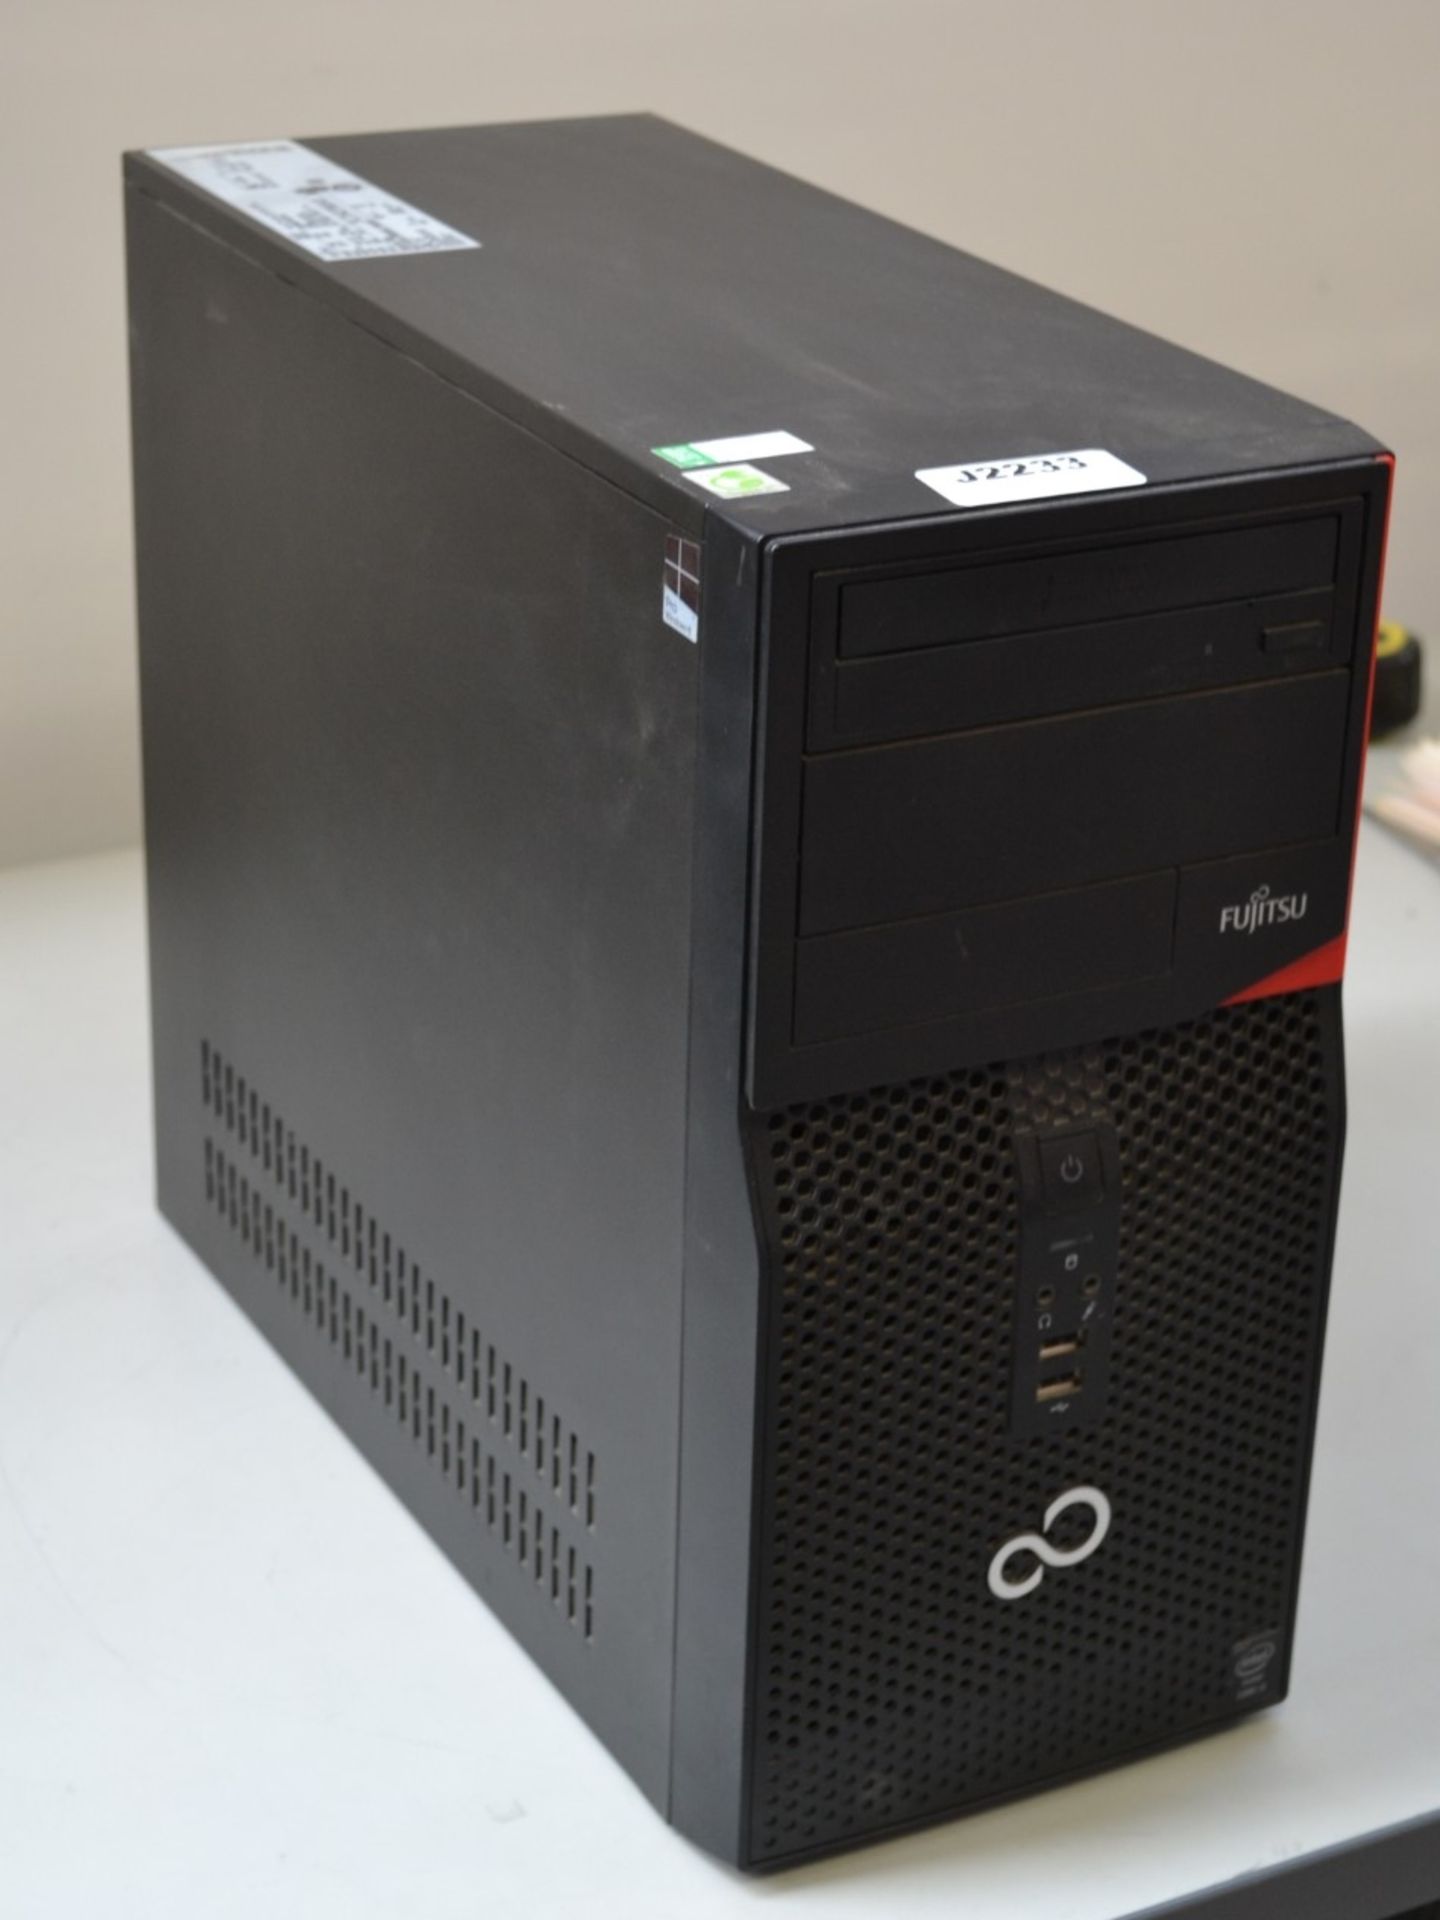 1 x Fujitsu Esprimo P420 Desktop Computer - Features Intel Core i3-4130 3.4ghz Processor and 4gb - Image 3 of 4